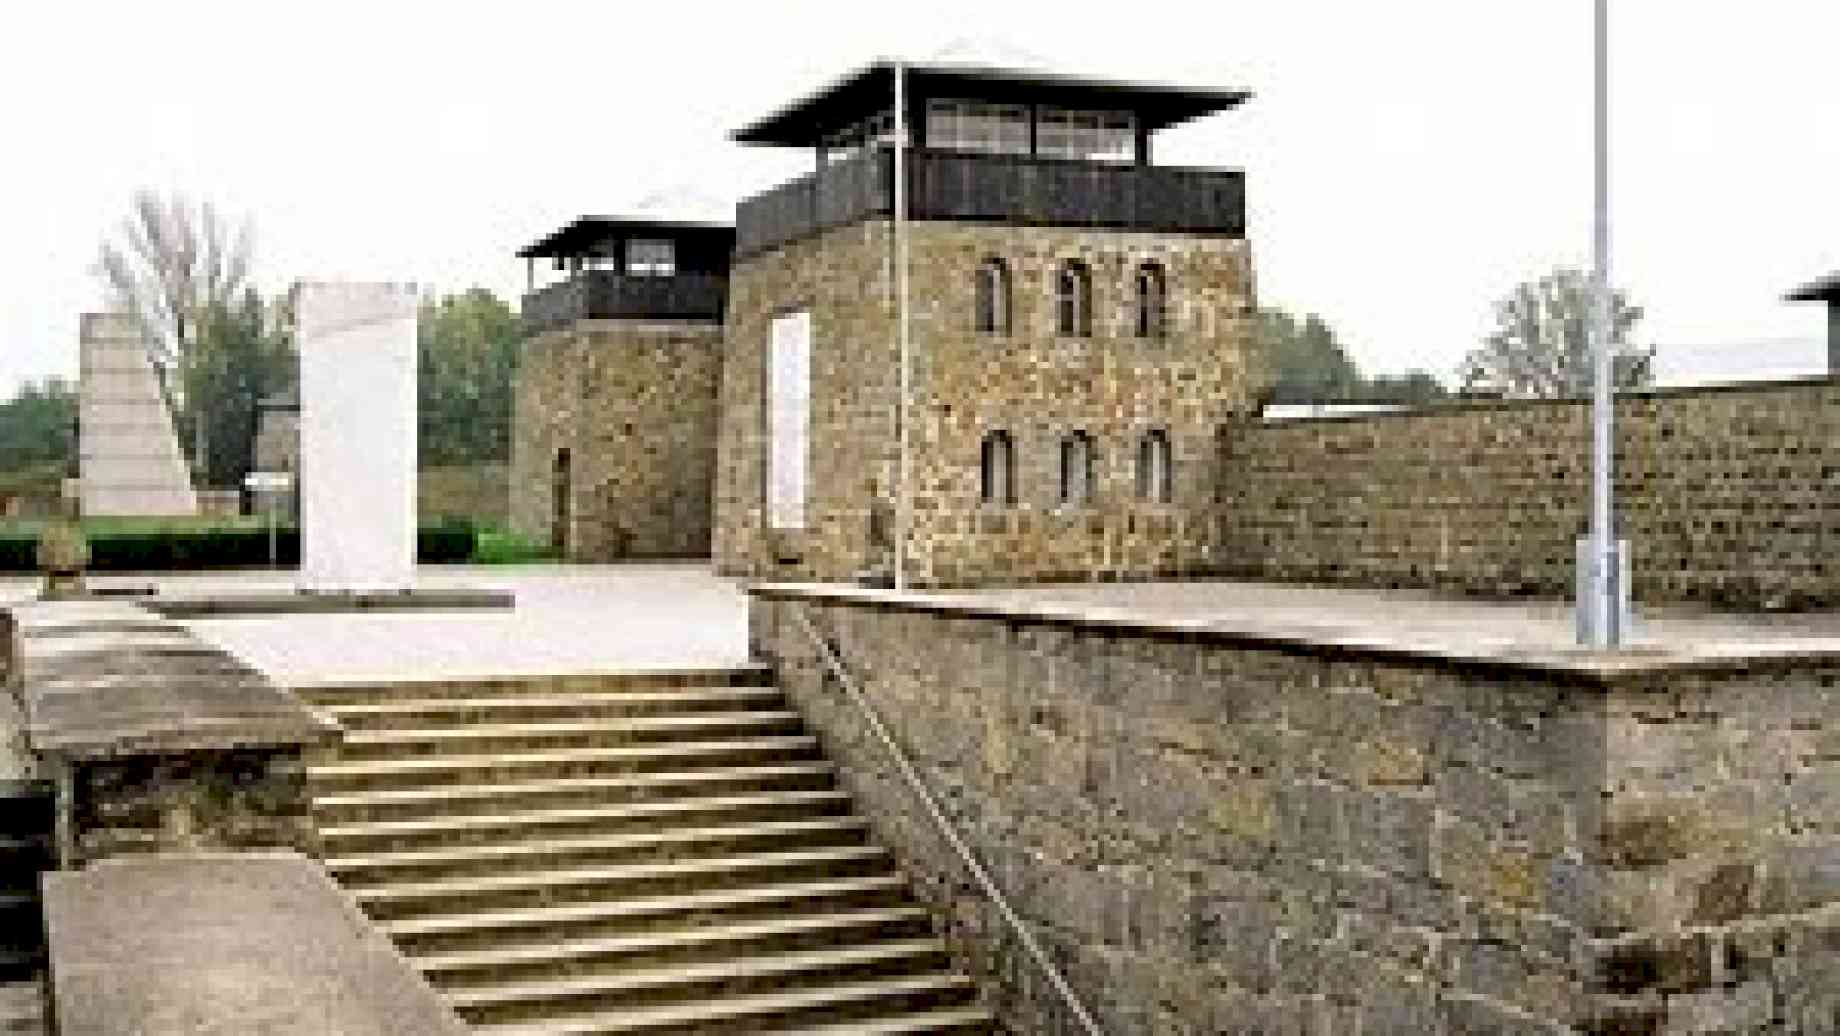 Mauthausen-Gusen Concentration camp site